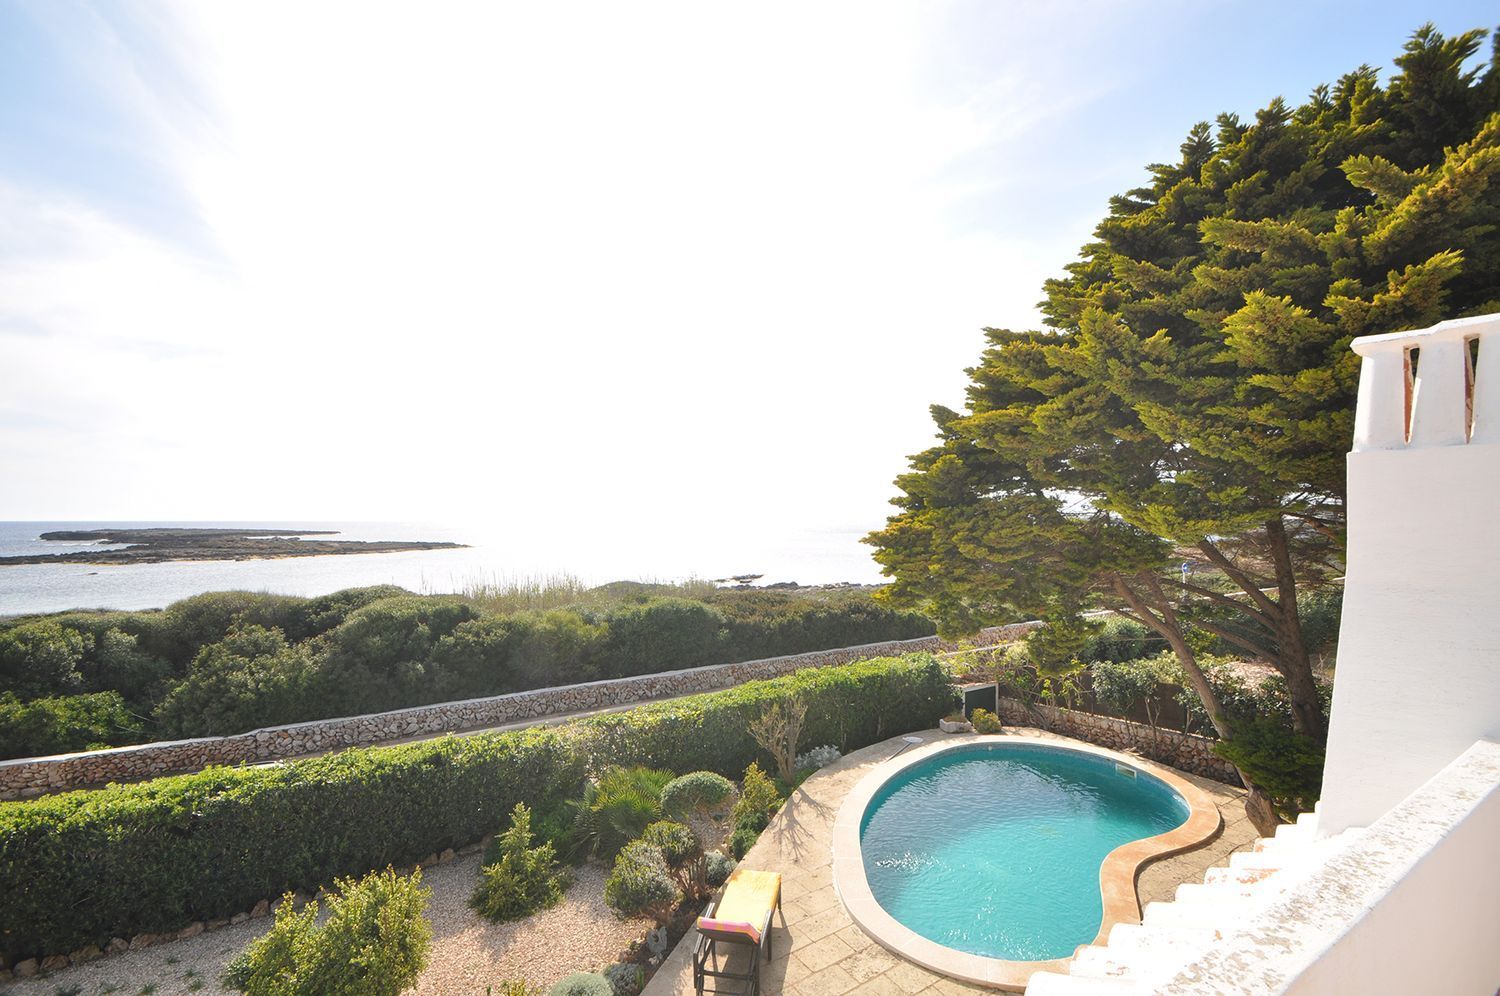 Villa for sale in first sea line in Sant Lluís, in Menorca, Spain